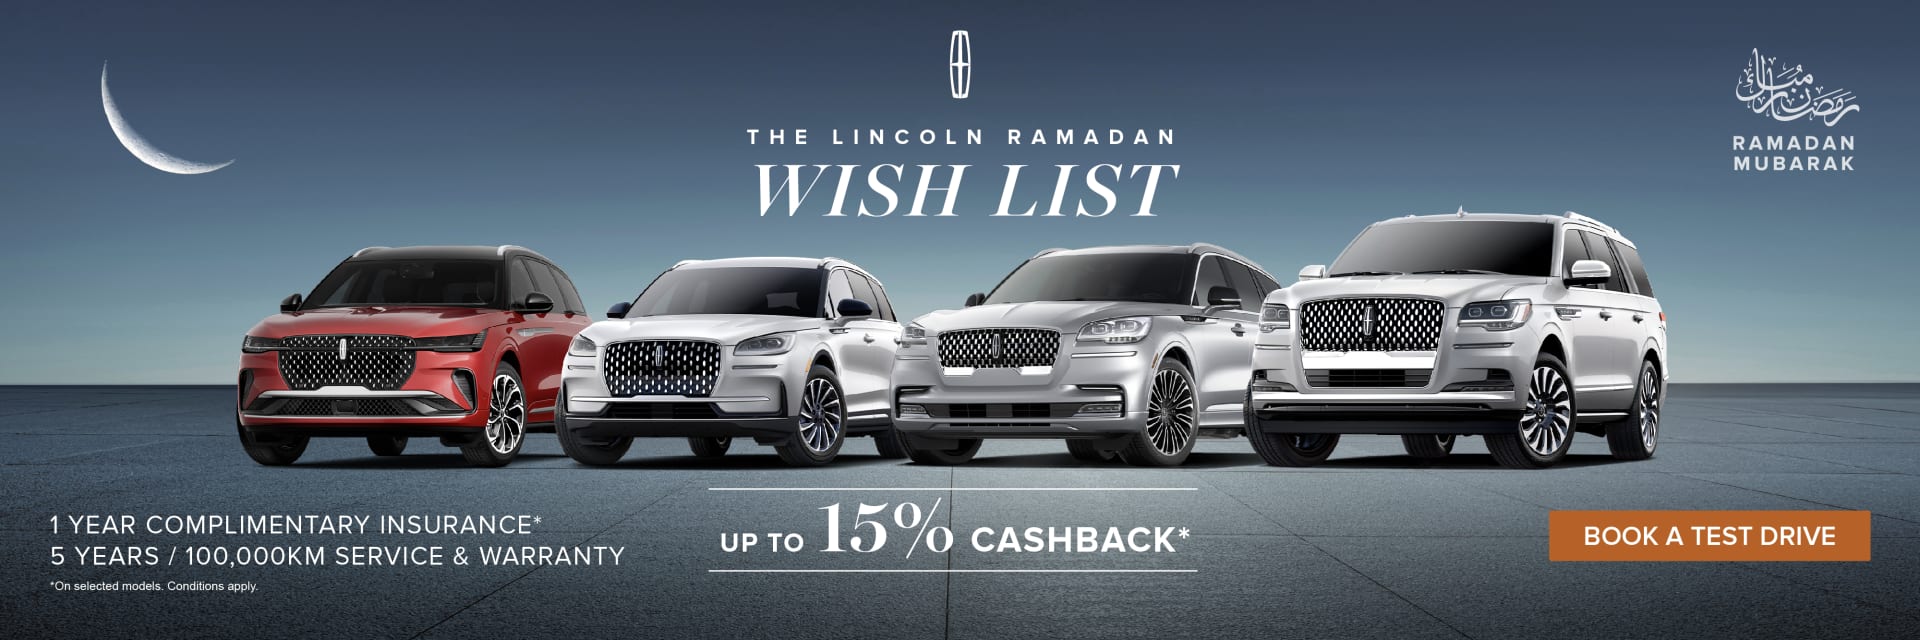 Lincoln Ramadan Offers